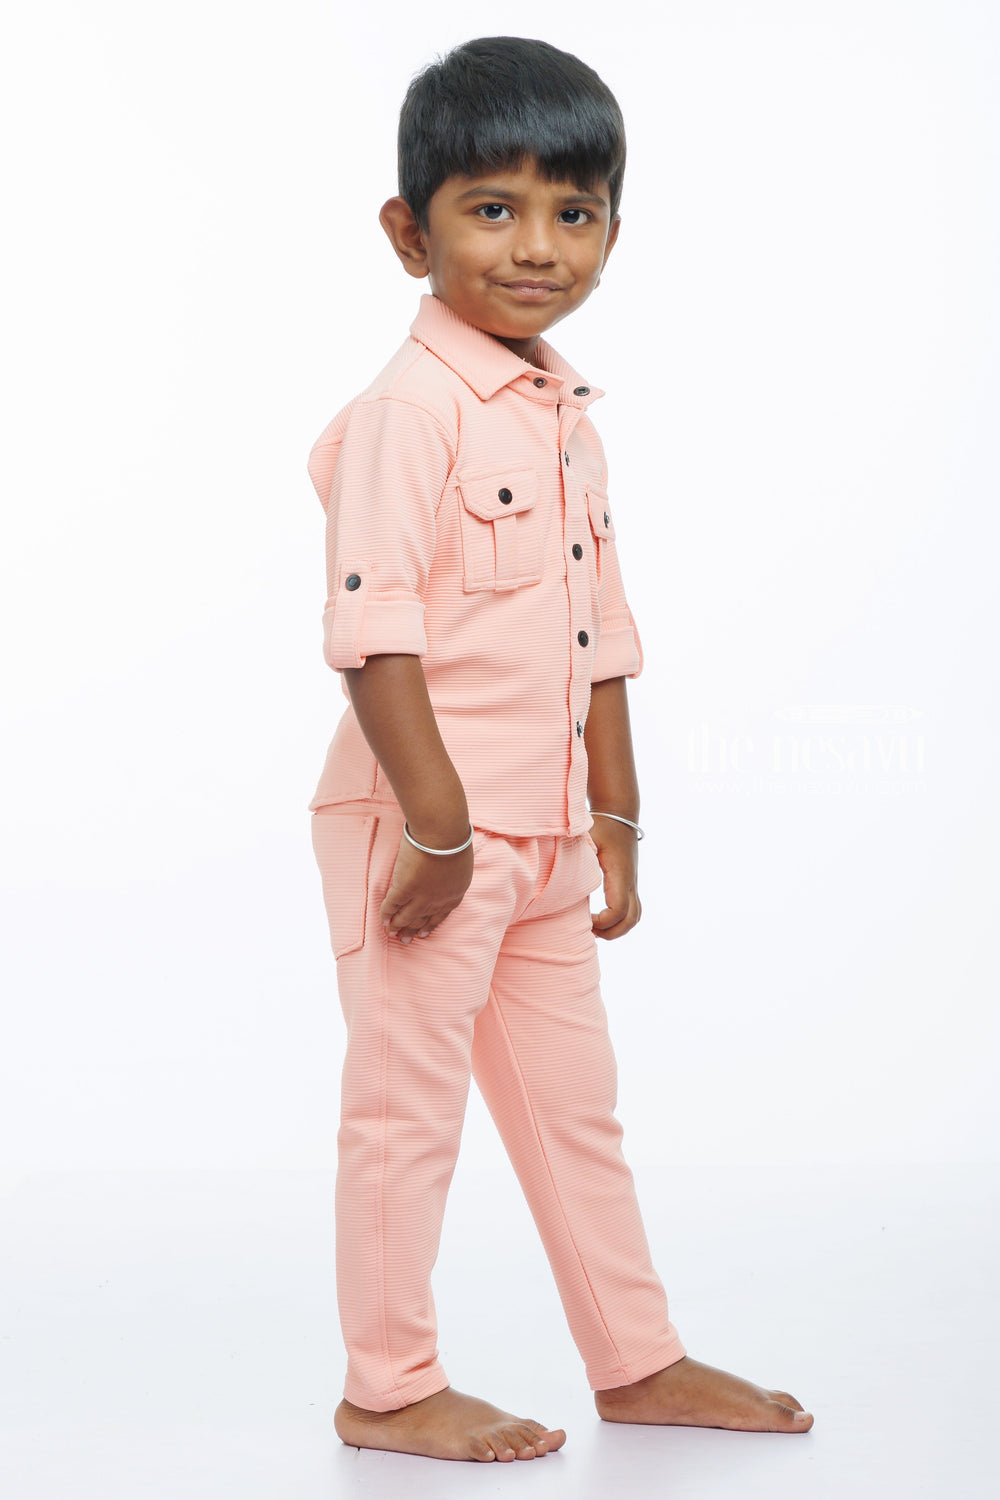 The Nesavu Boys Casual Set Boys Pastel Pink Shirt and Pant Set - Trendy and Comfortable Nesavu Boys Chic Pastel Pink Casual Set | Ideal for Stylish Comfort | The Nesavu